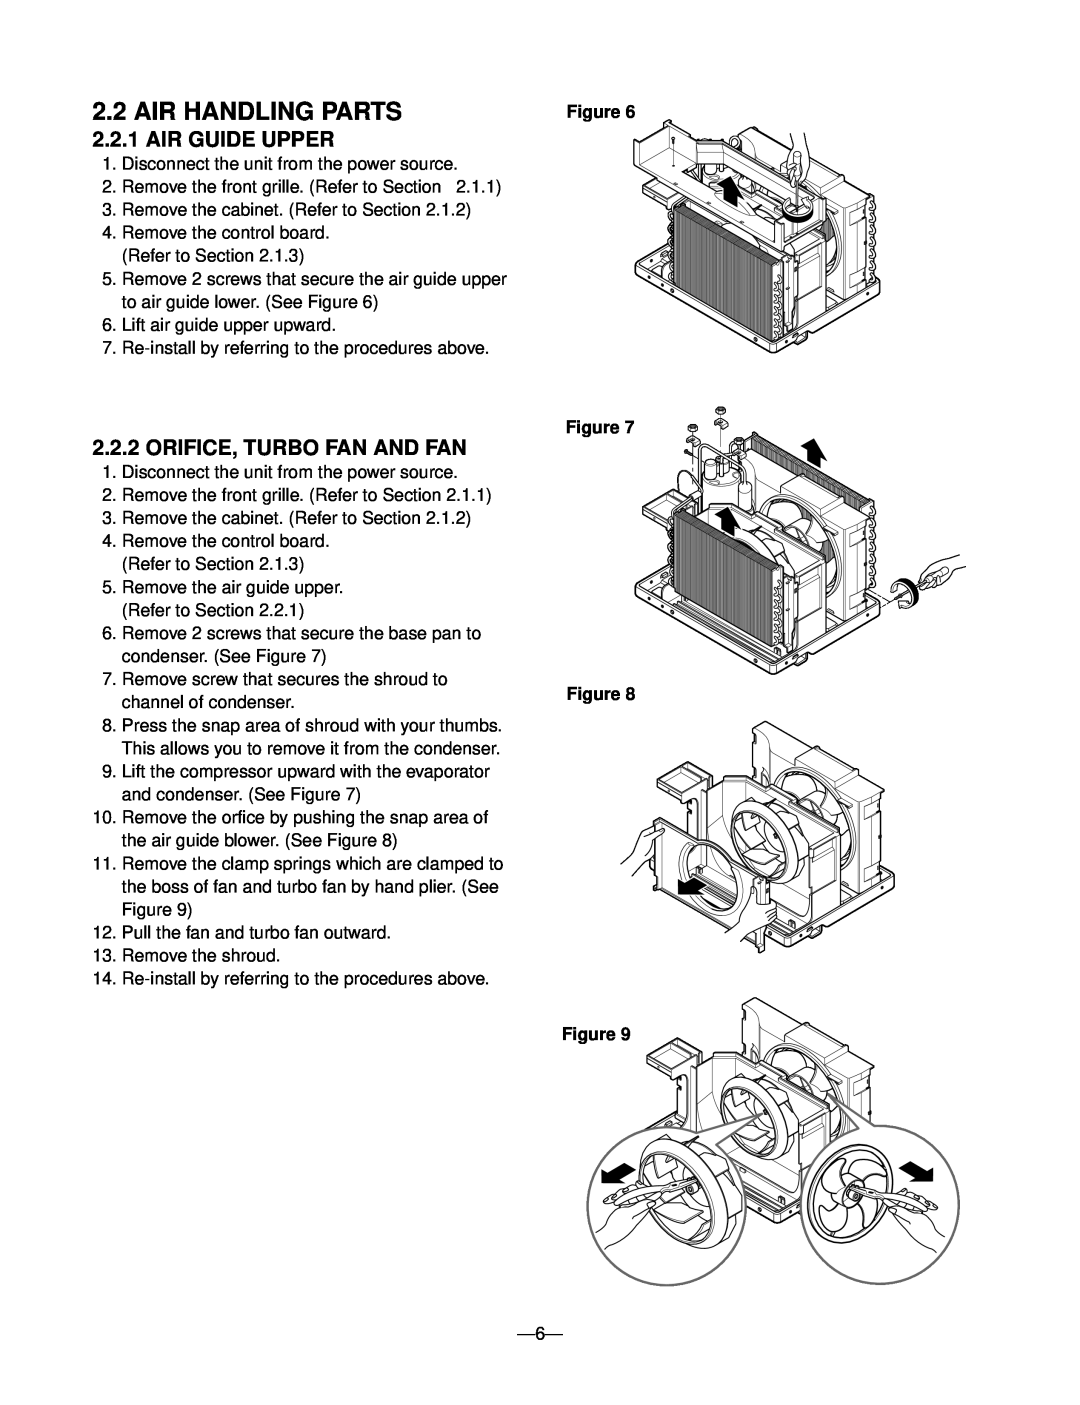 Heat Controller RADS-51B Air Handling Parts, Air Guide Upper, Orifice, Turbo Fan And Fan, Figure Figure Figure Figure 